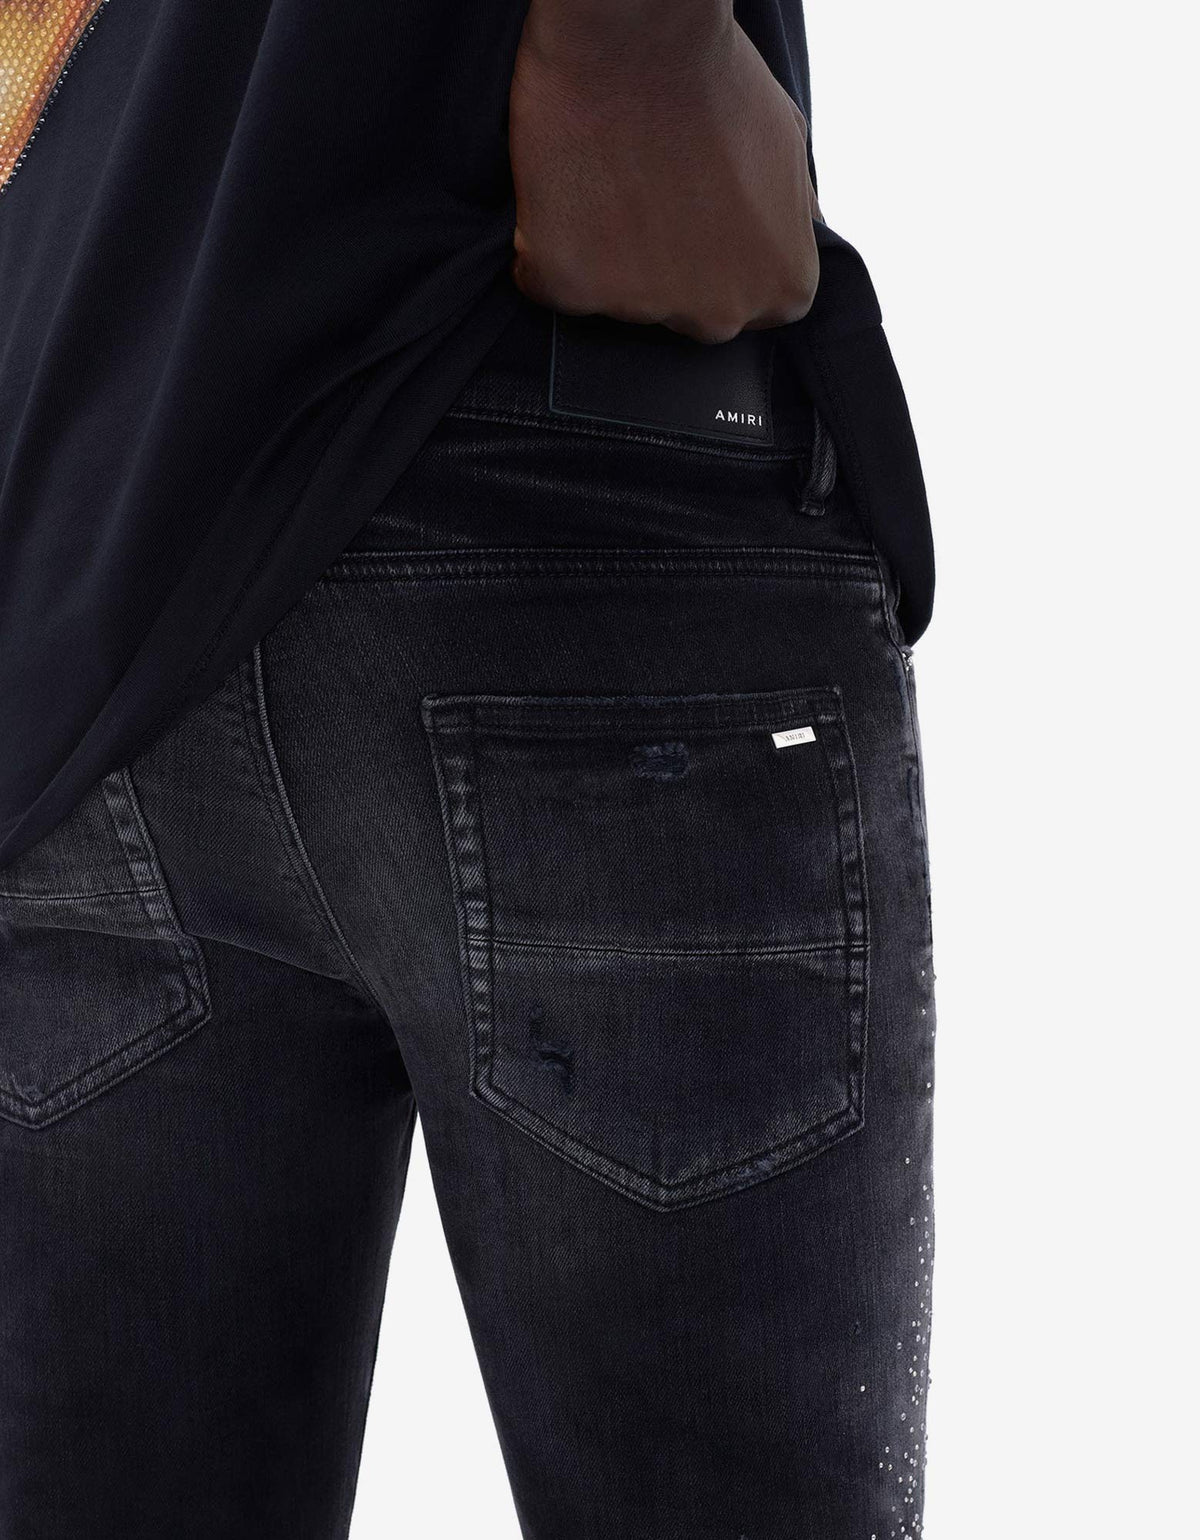 Amiri Black Crystal Shotgun Jeans